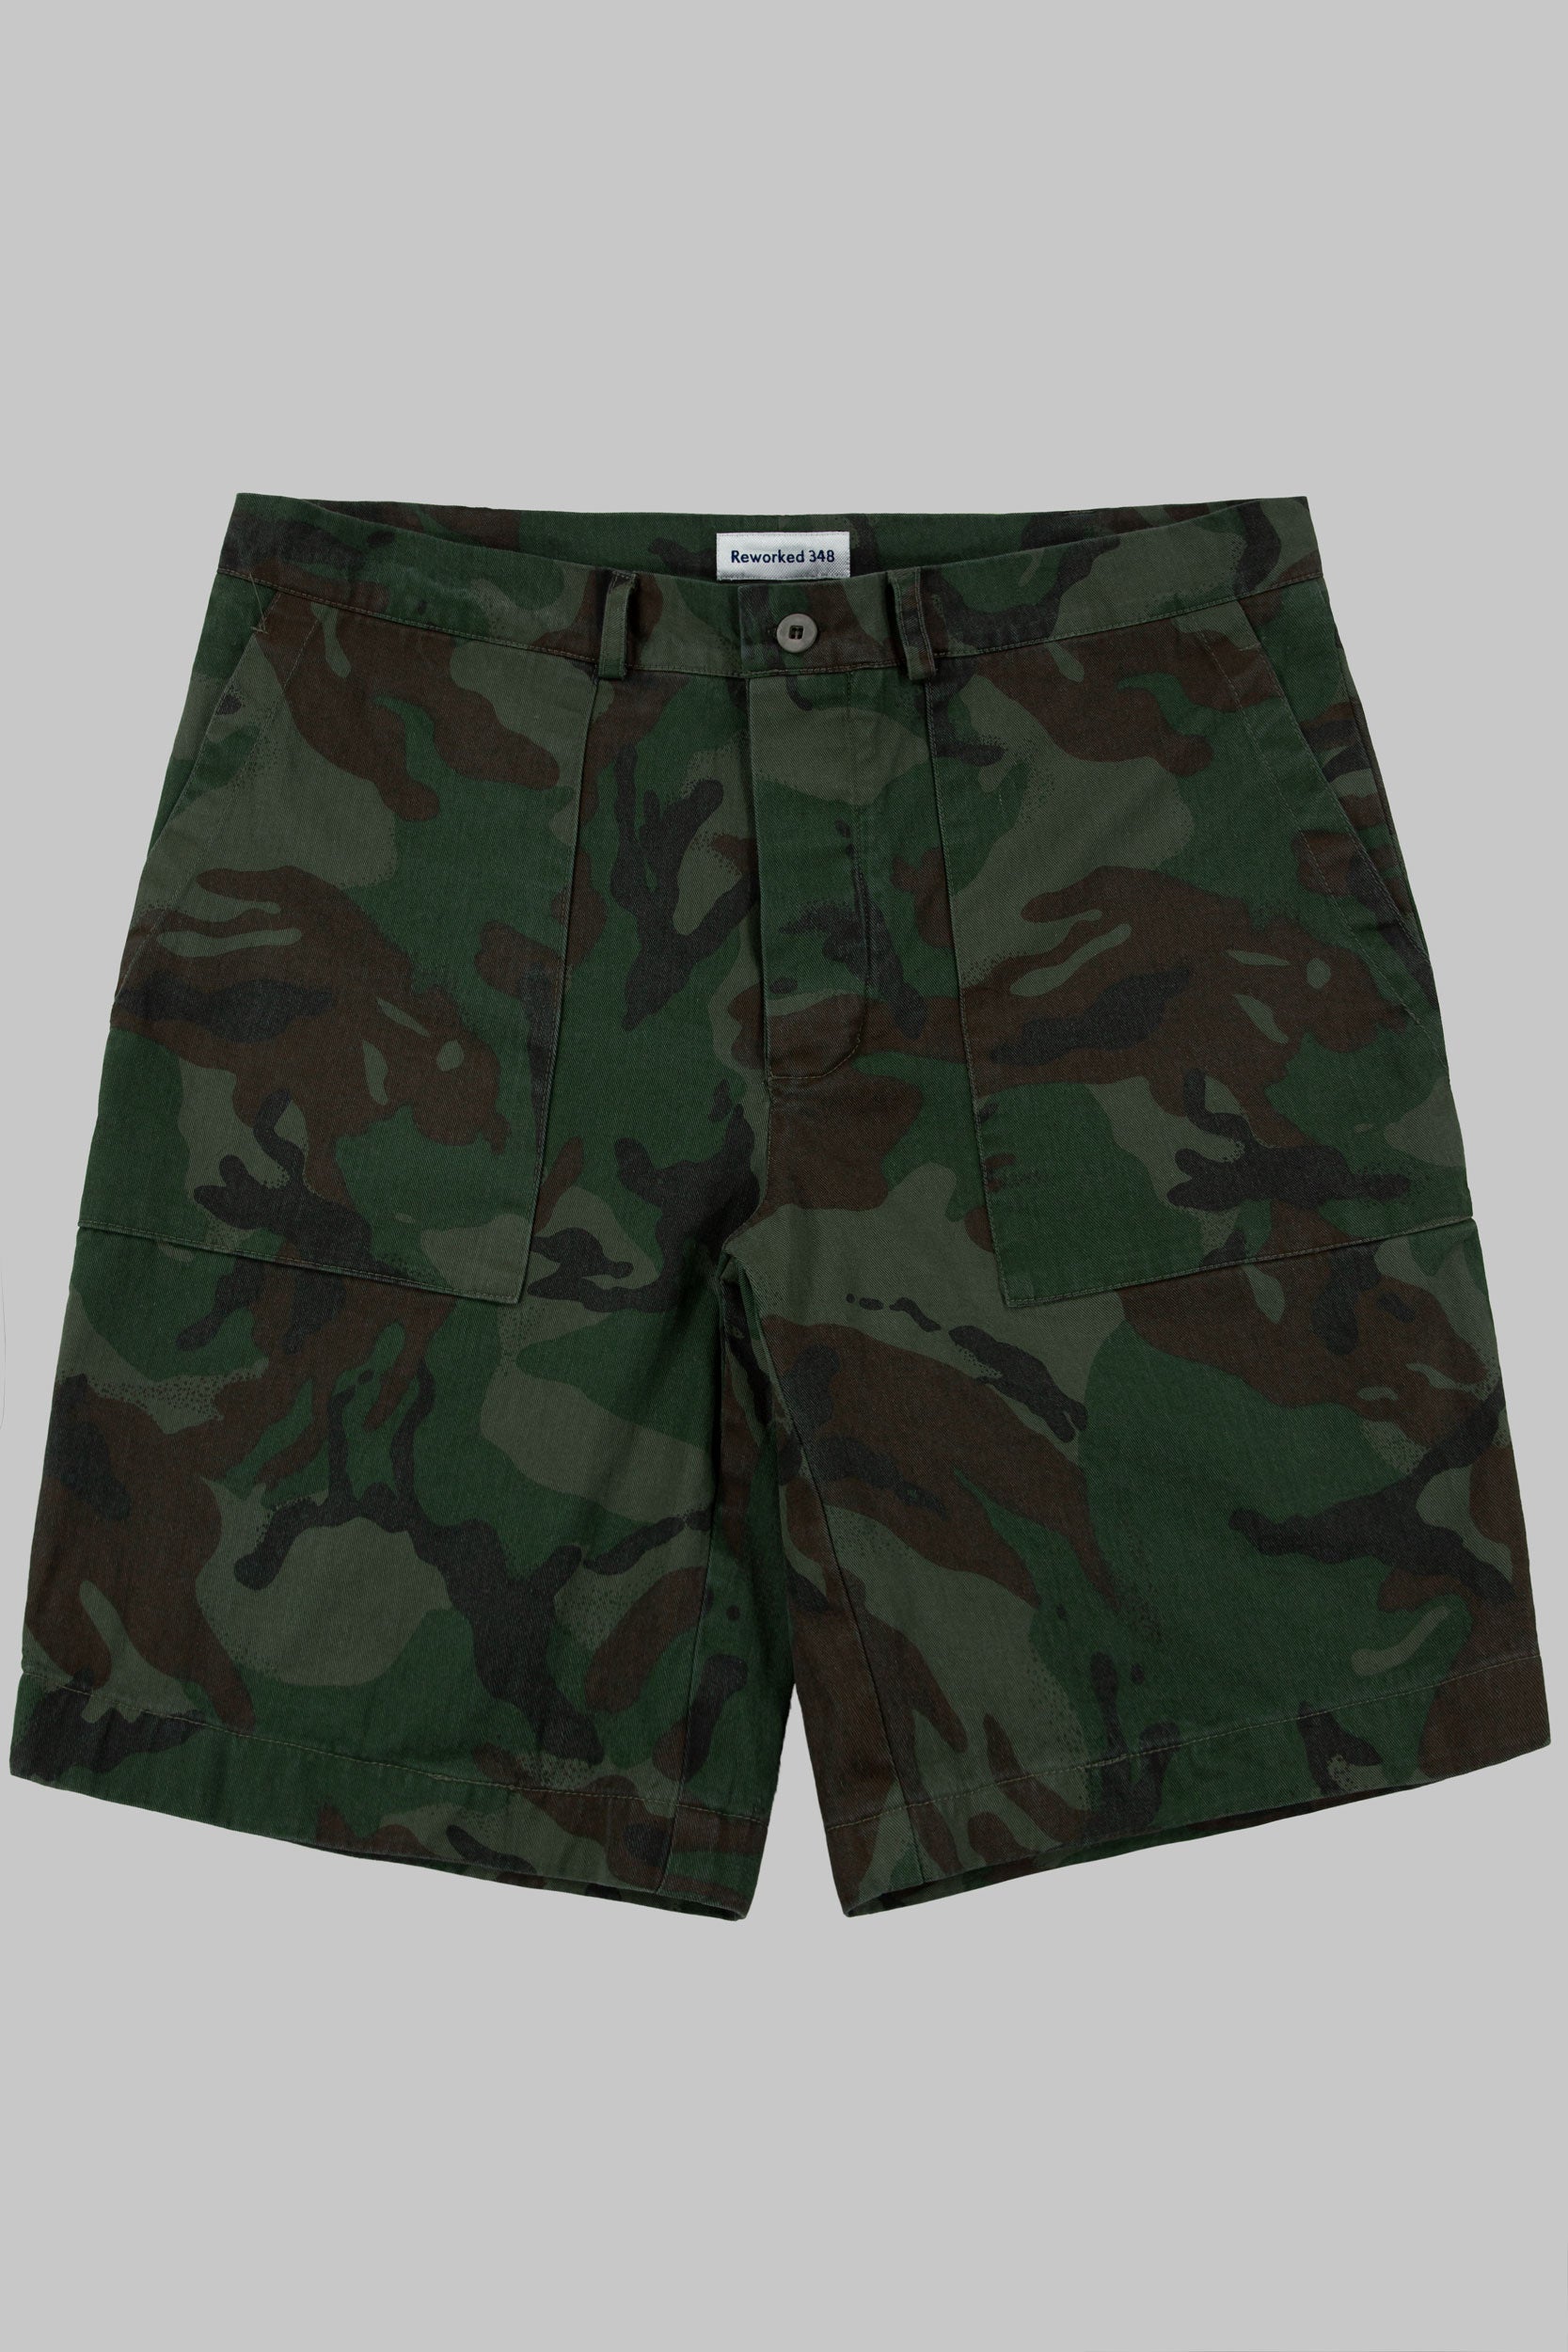 Jungle Camo Utility Shorts